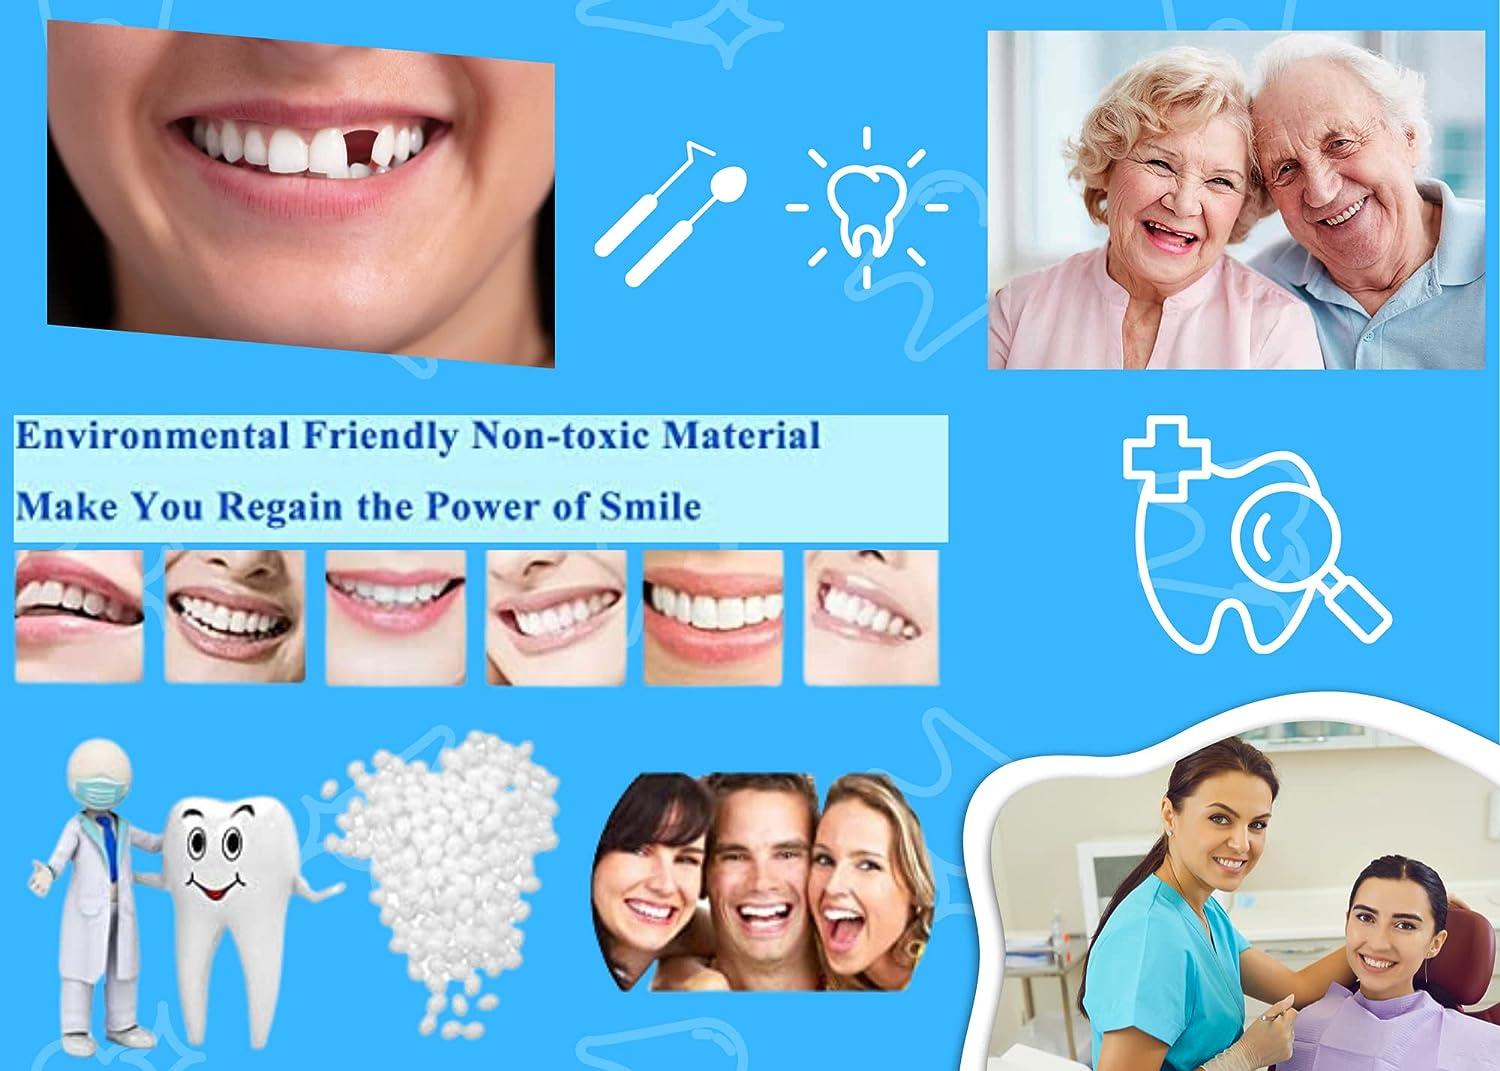 Temporary Tooth Repair Kit Temp Dental Fix Missing for 30 teeth